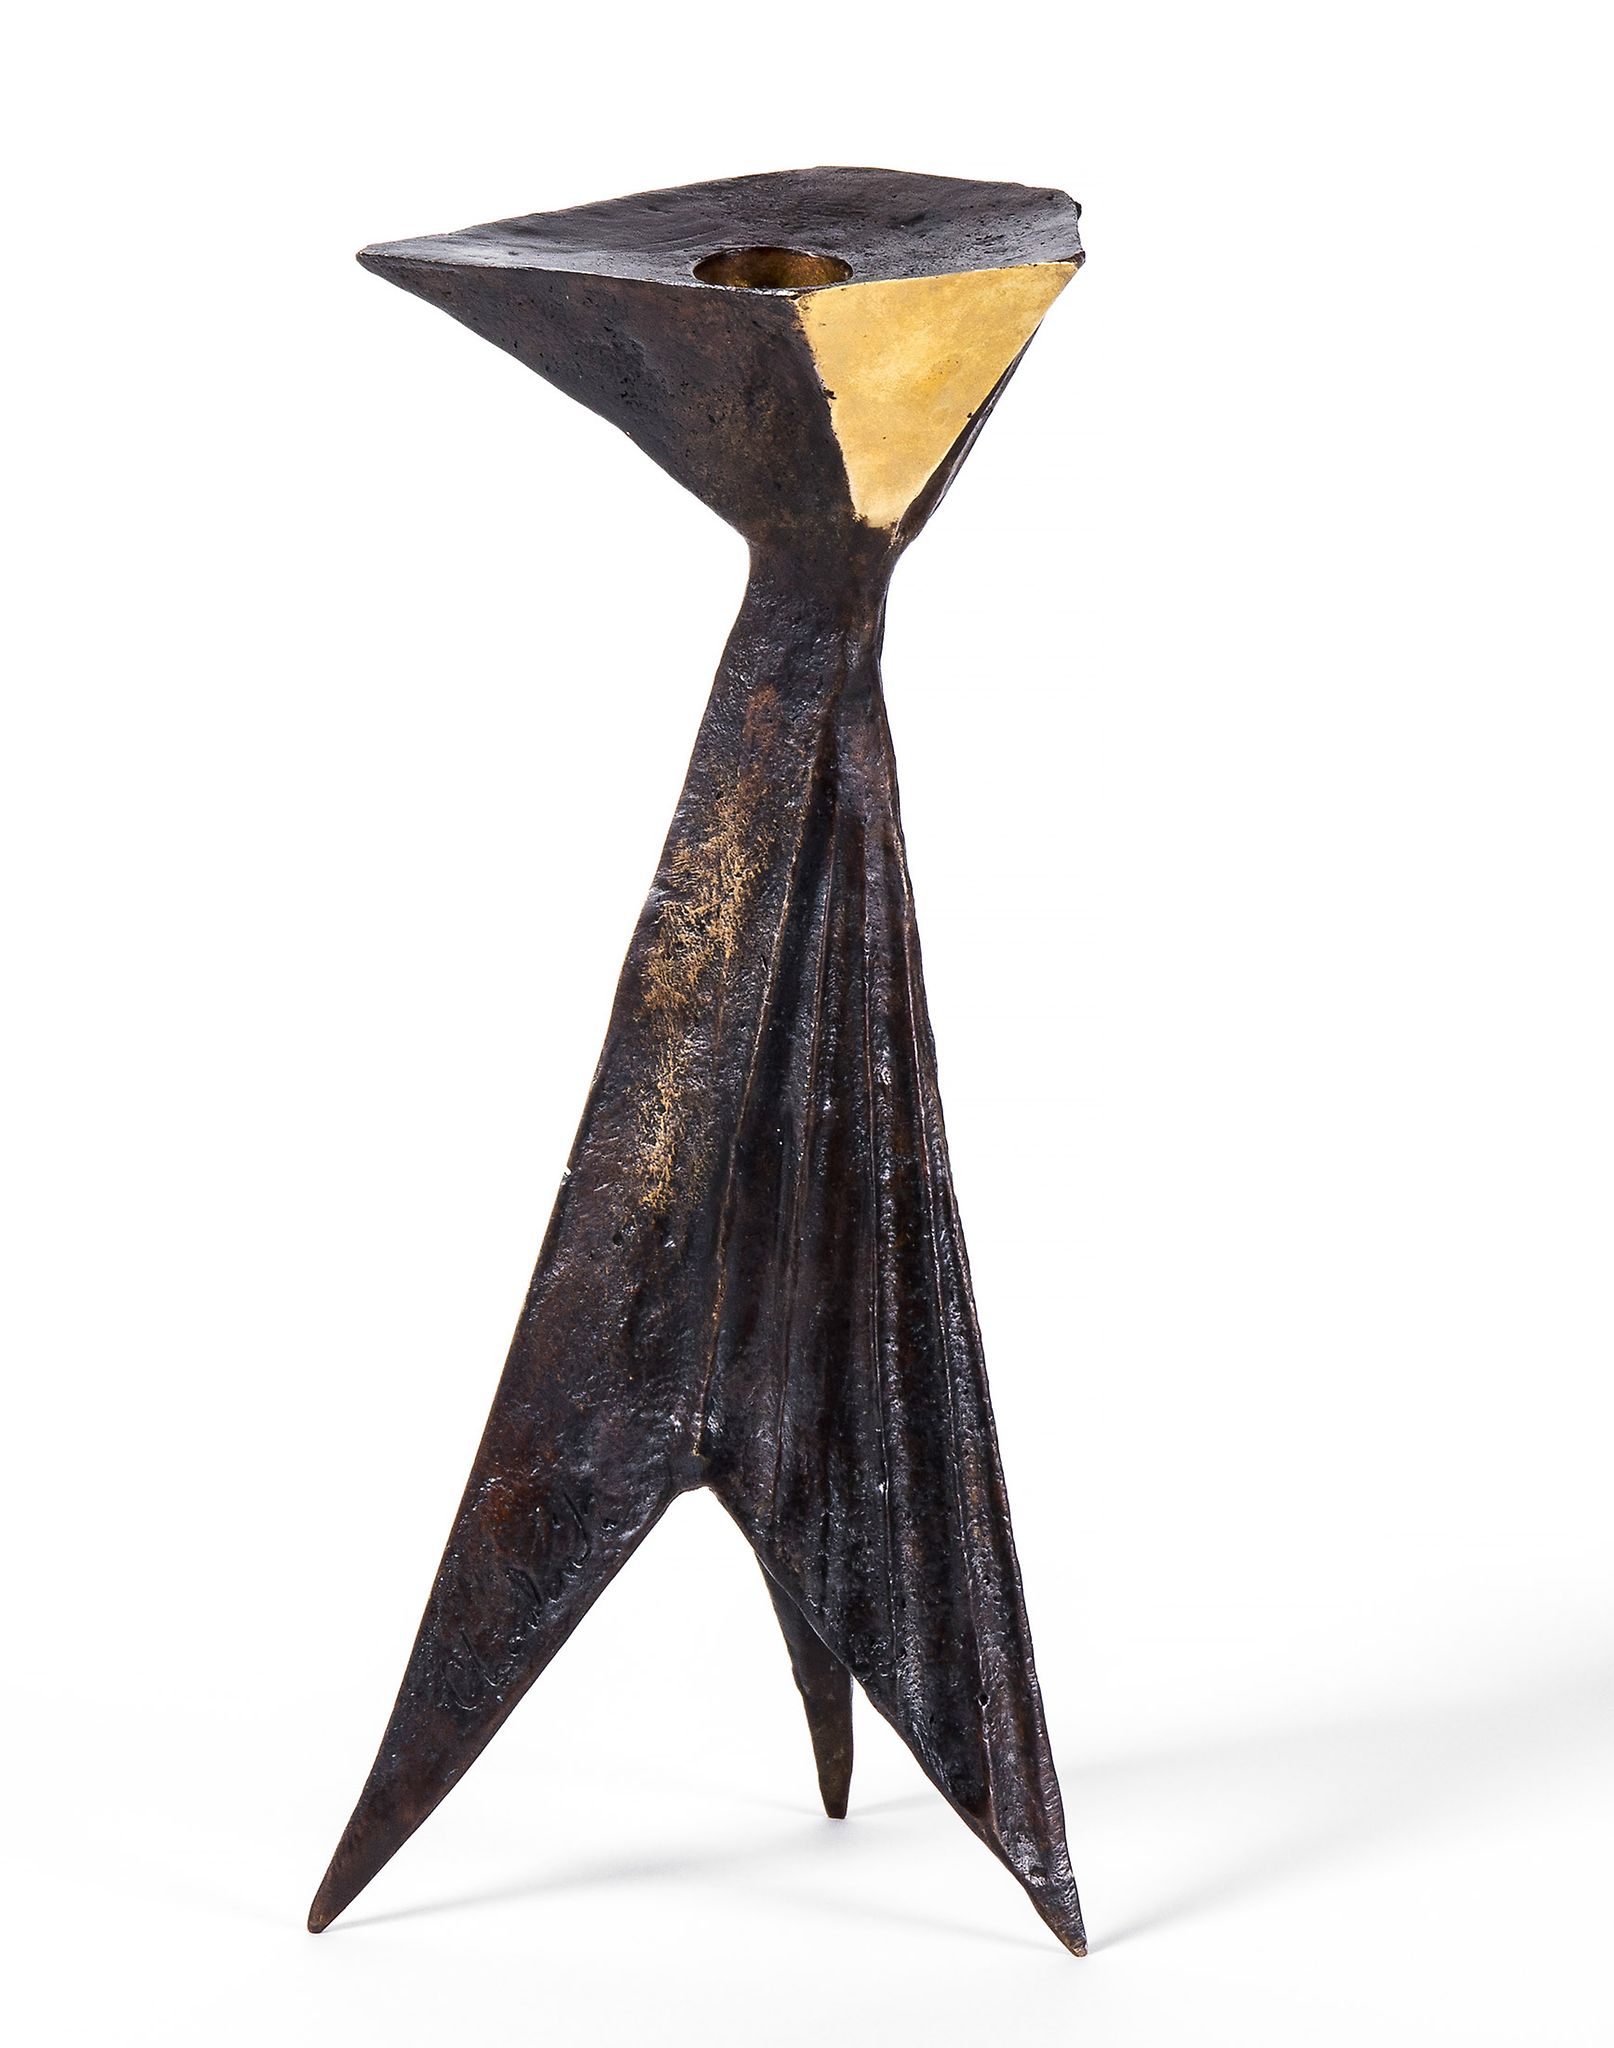 Lynn Chadwick (1914-2003) - Candle Stick (C.139) bronze candlestick with green patina, one